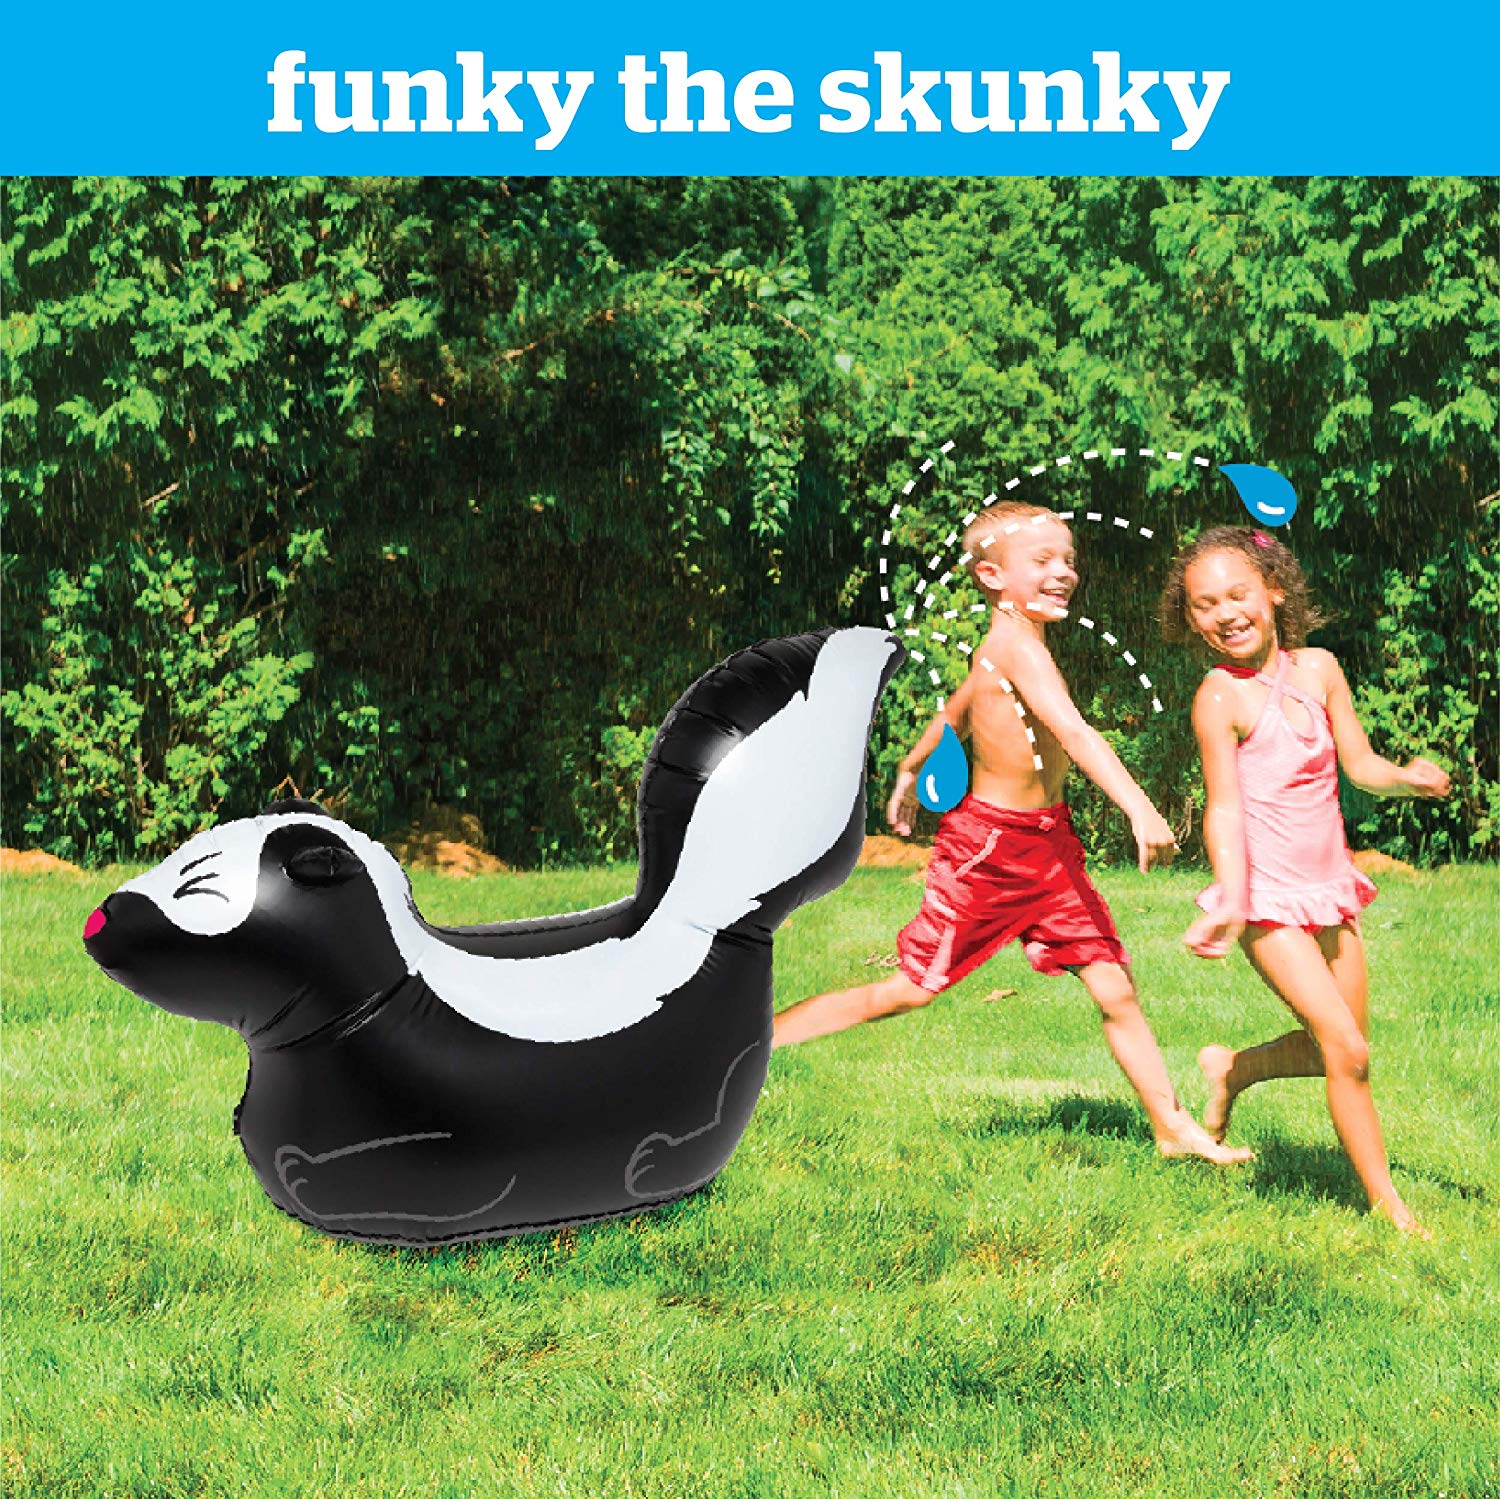 BigMouth Inc Funky The Skunky Inflatable Kids Yard Sprinkler - Hilarious 2-Foot Tall Inflatable Skunk Sprinkler